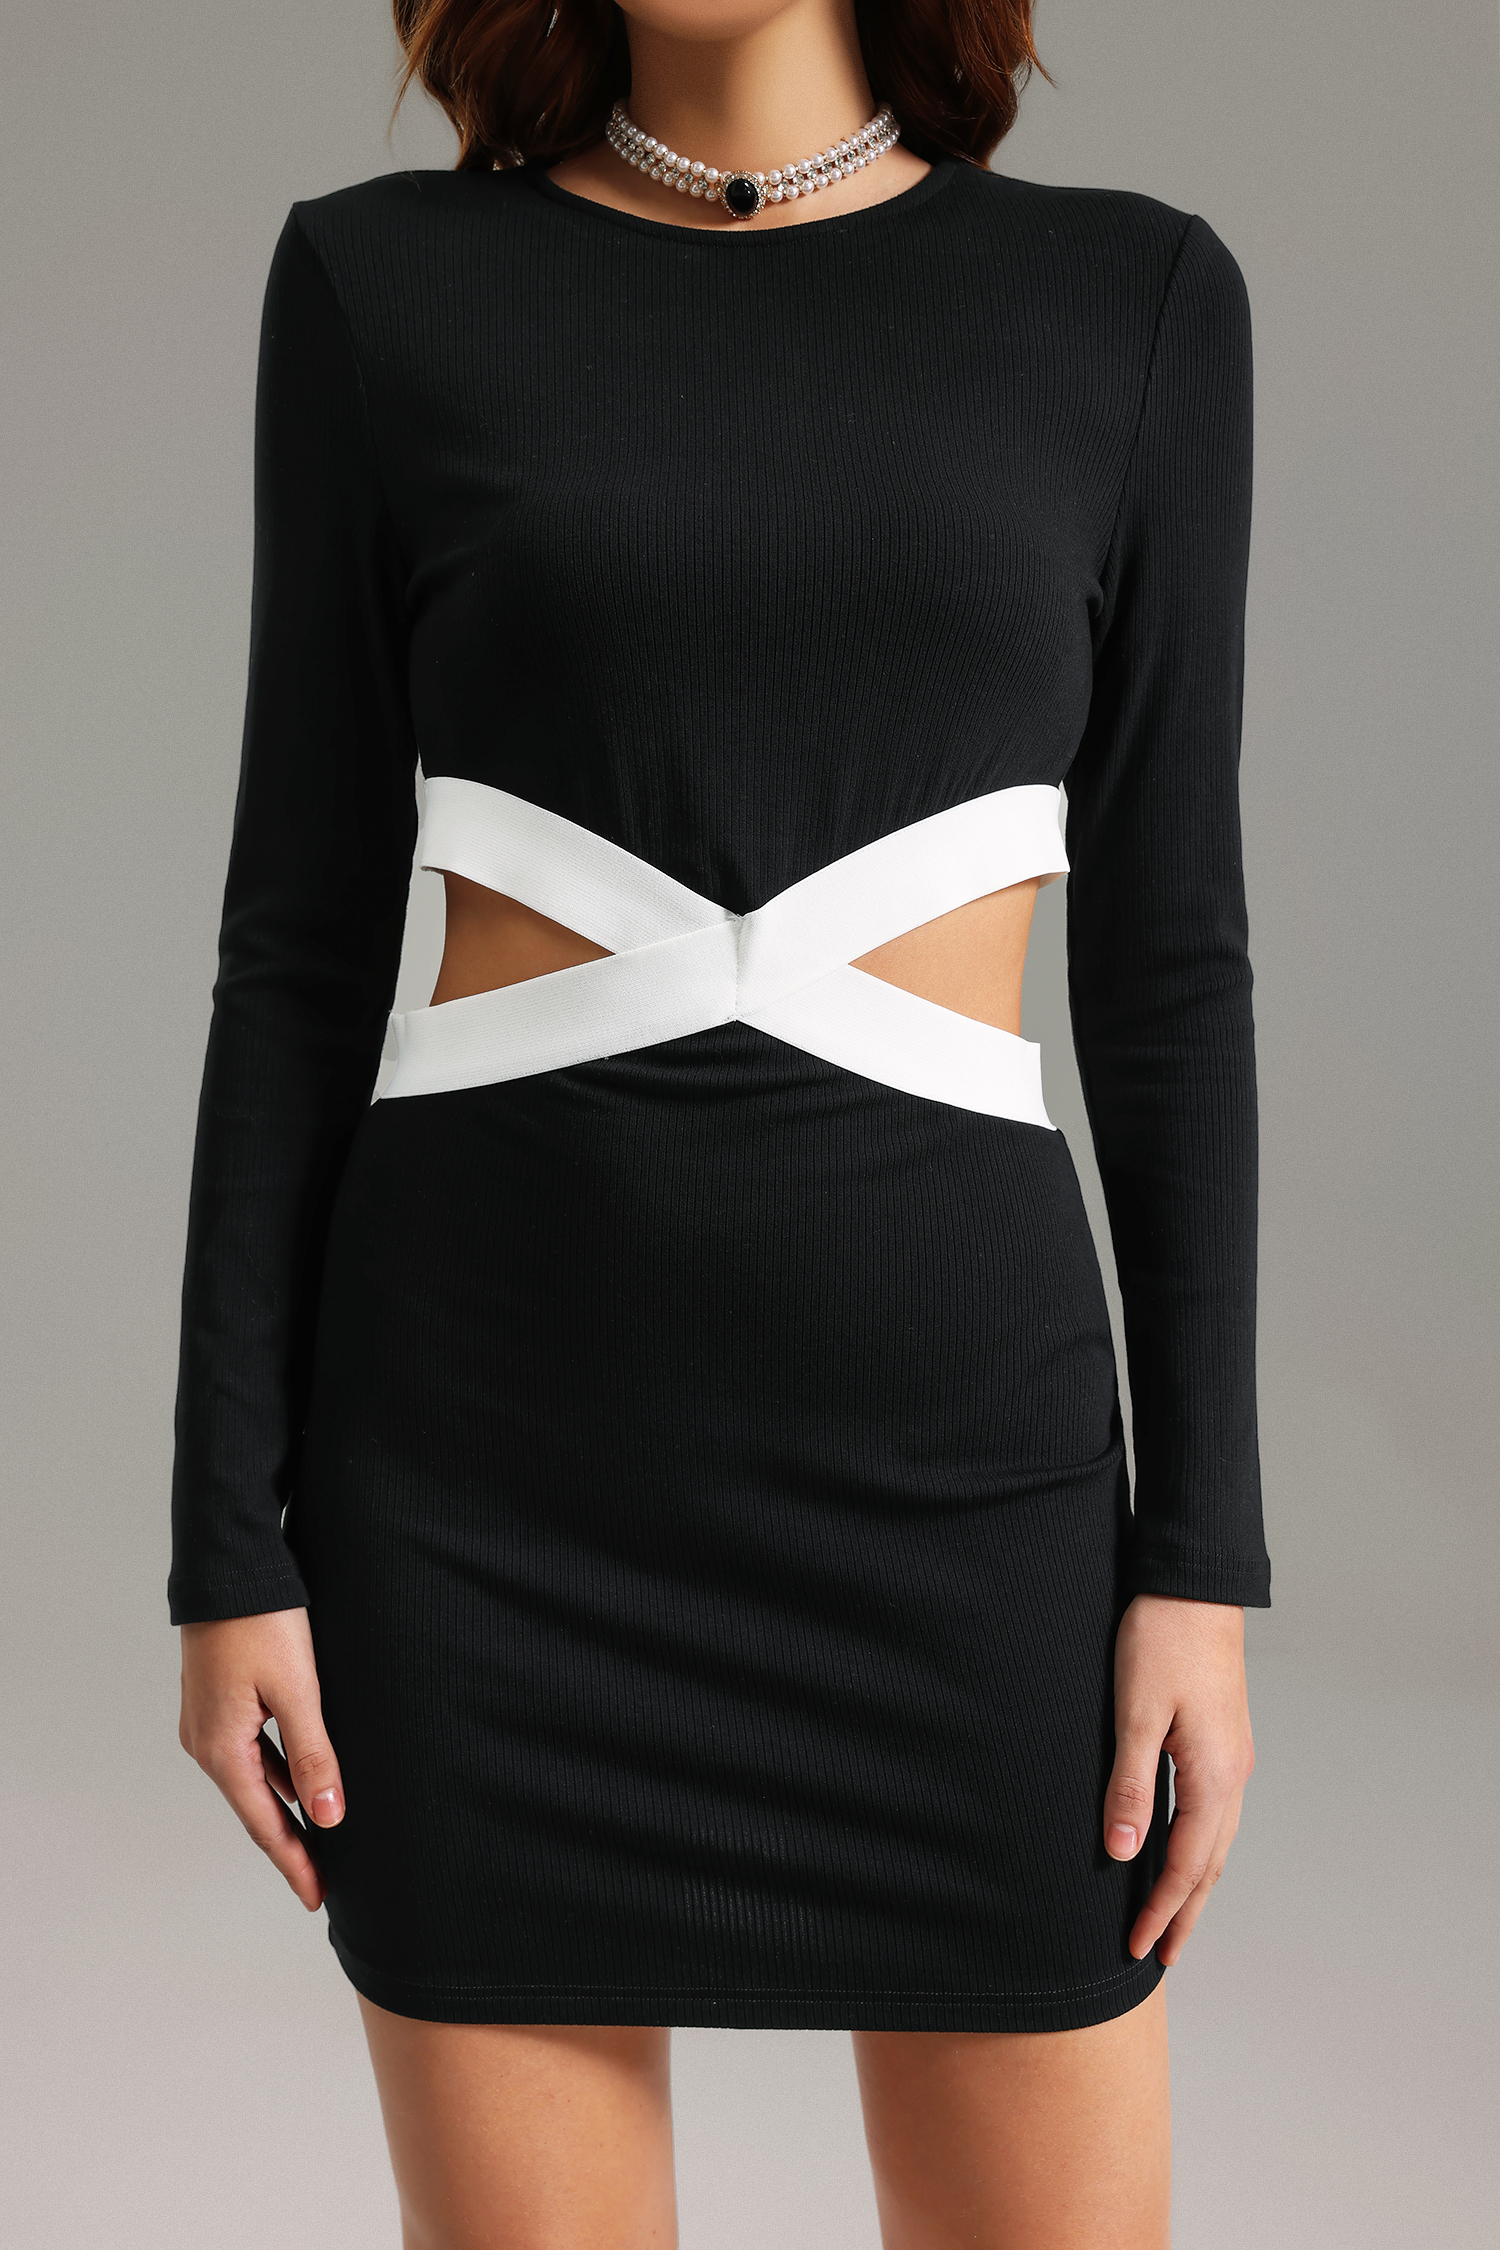 Uzaco Cutout Knitted mini Dress - Black